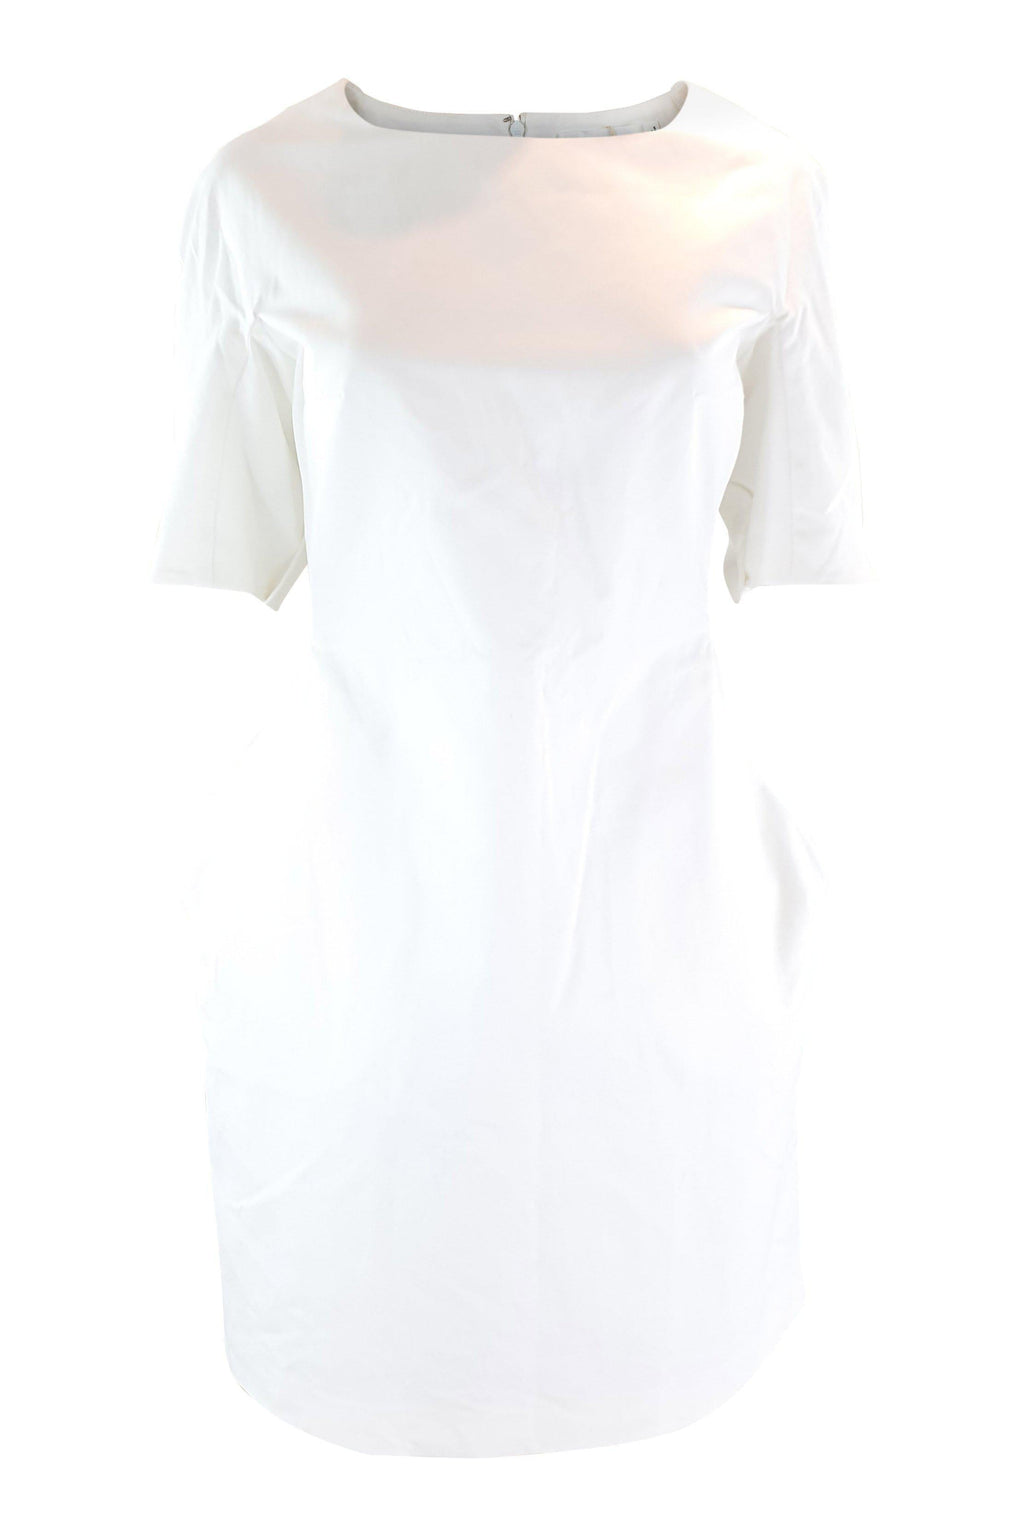 JIL SANDER S/S 2013 White Cotton Blend Sculptured Kimono Dress (DE 38)-Jil Sander-The Freperie